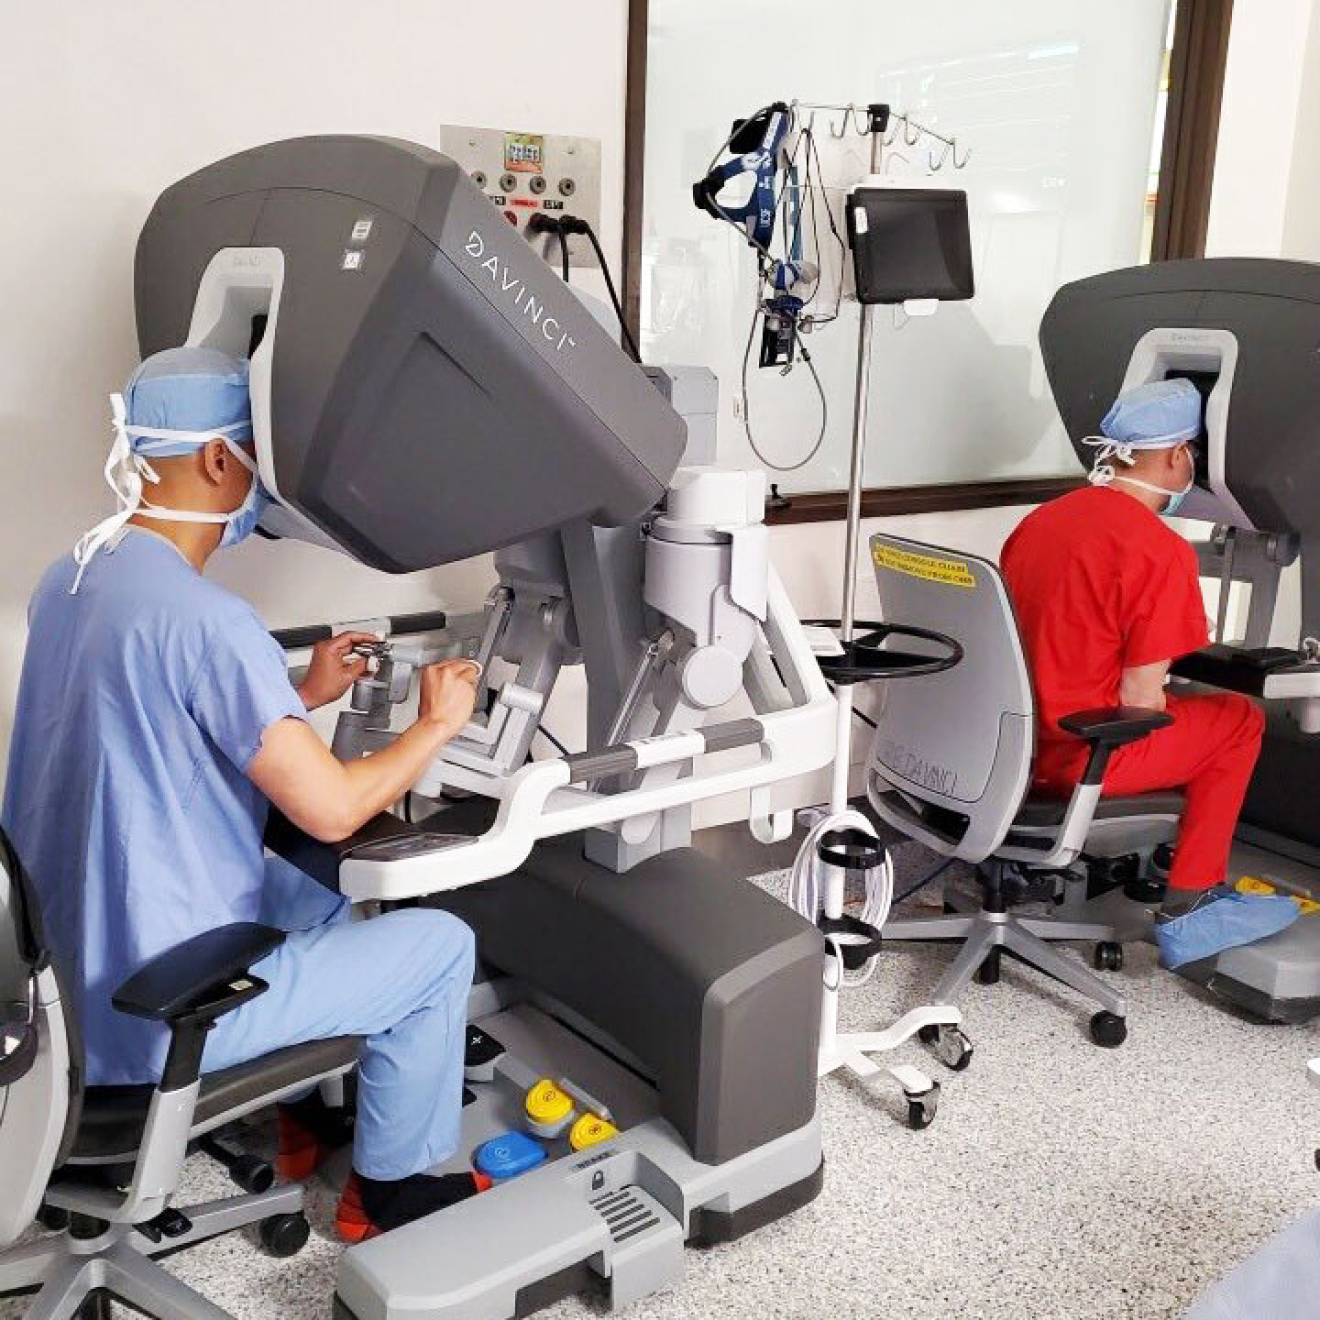 2 surgeons performing a cardiac surgery through machines